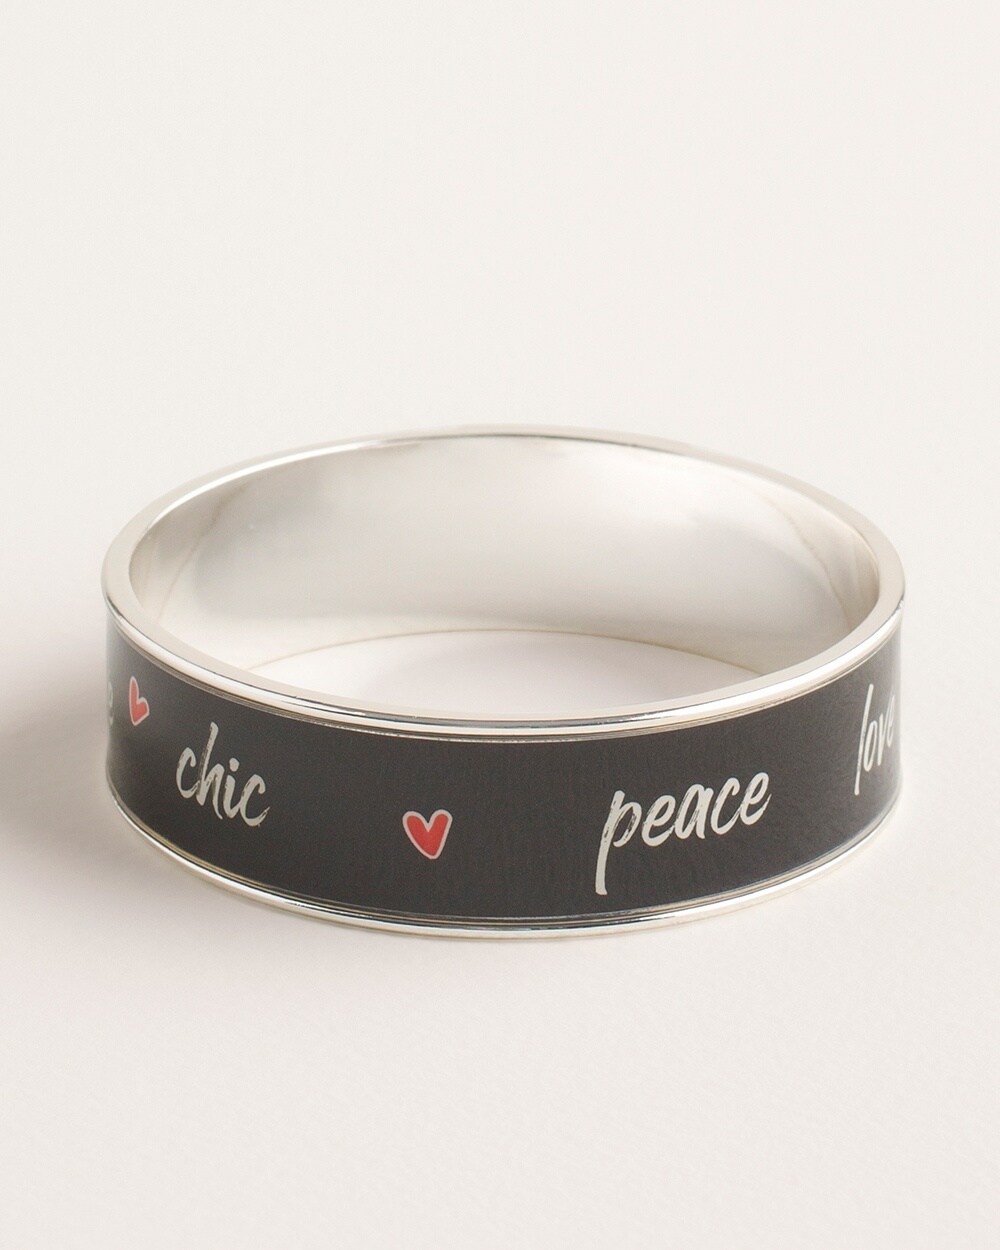 Silvertone Peace Love Chic Cuff Bracelet